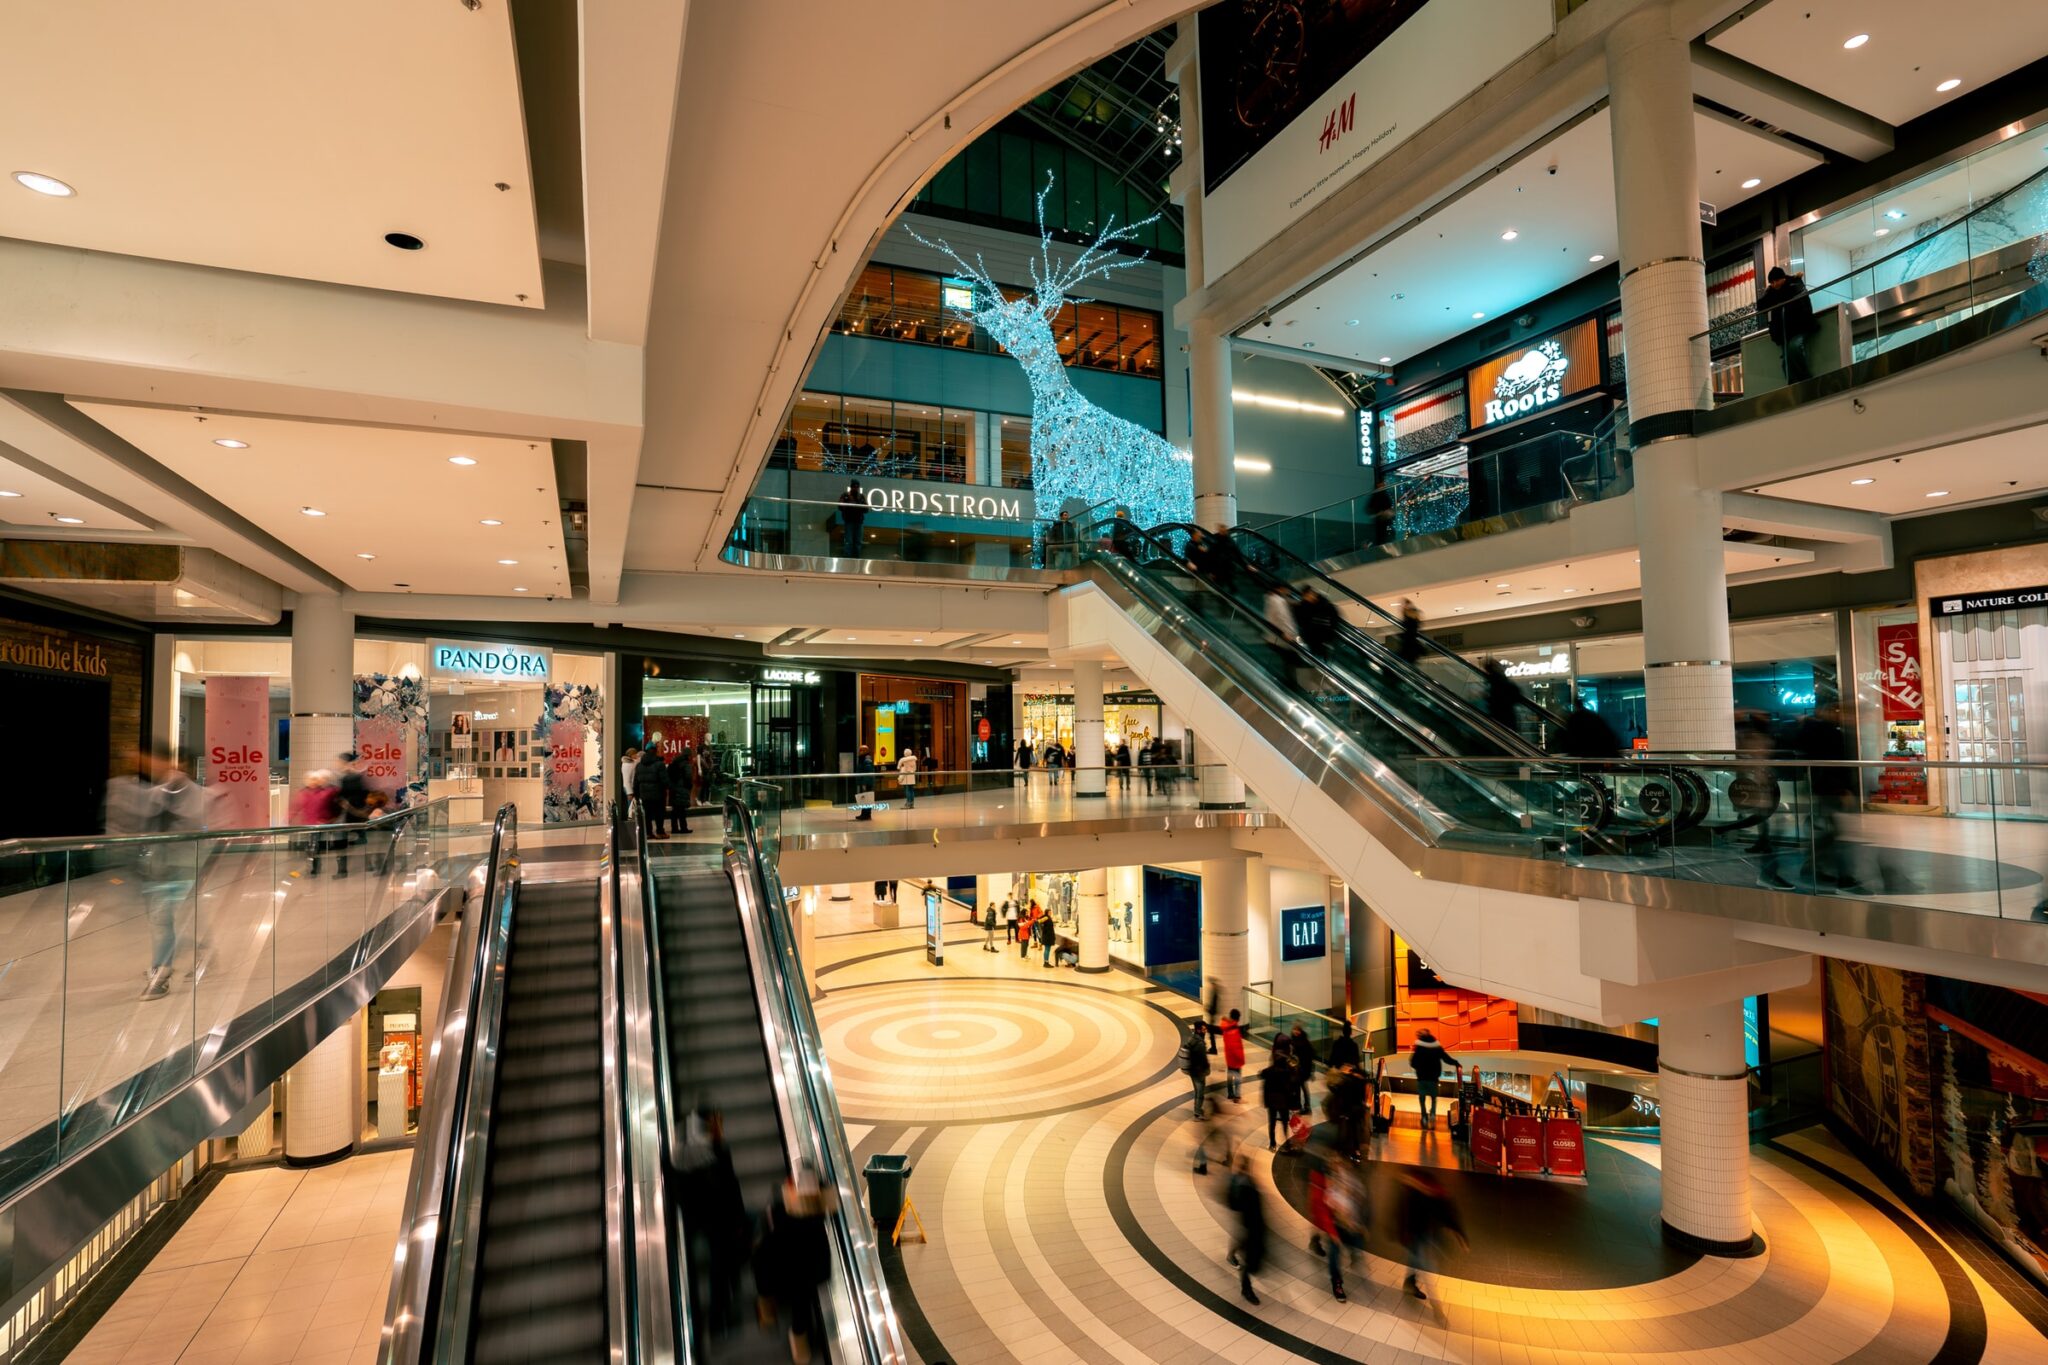 Shopping scene in a mall